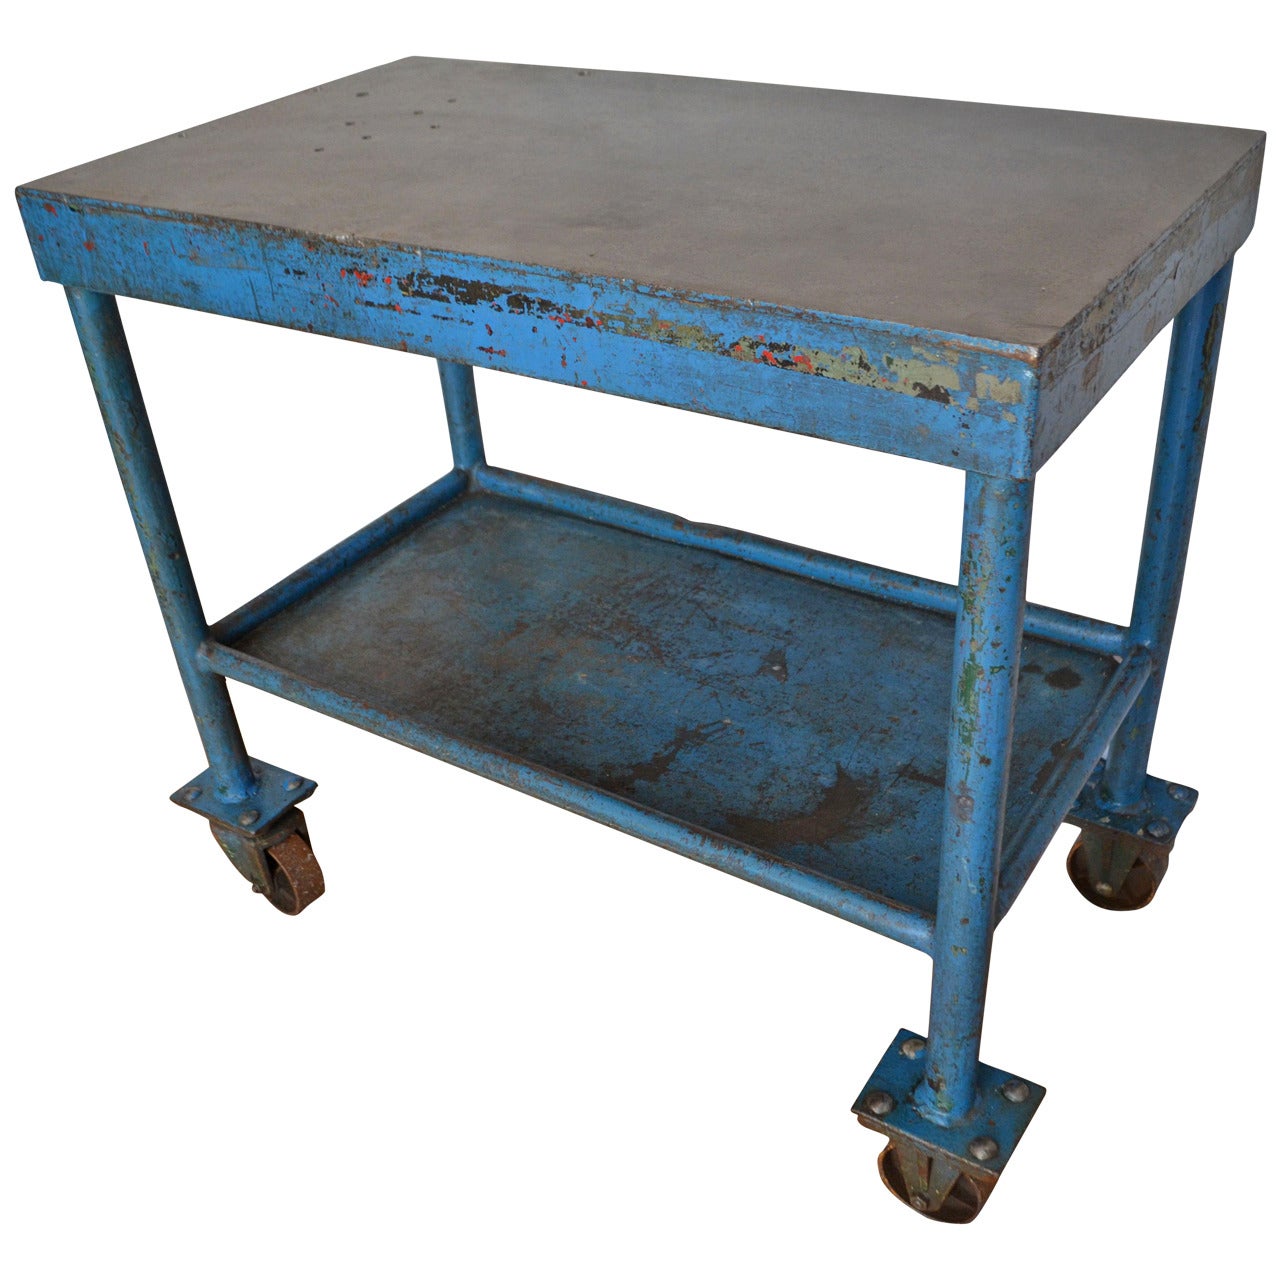 Industrial Work Table/Bar Cart on Wheels in Blue-painted Steel